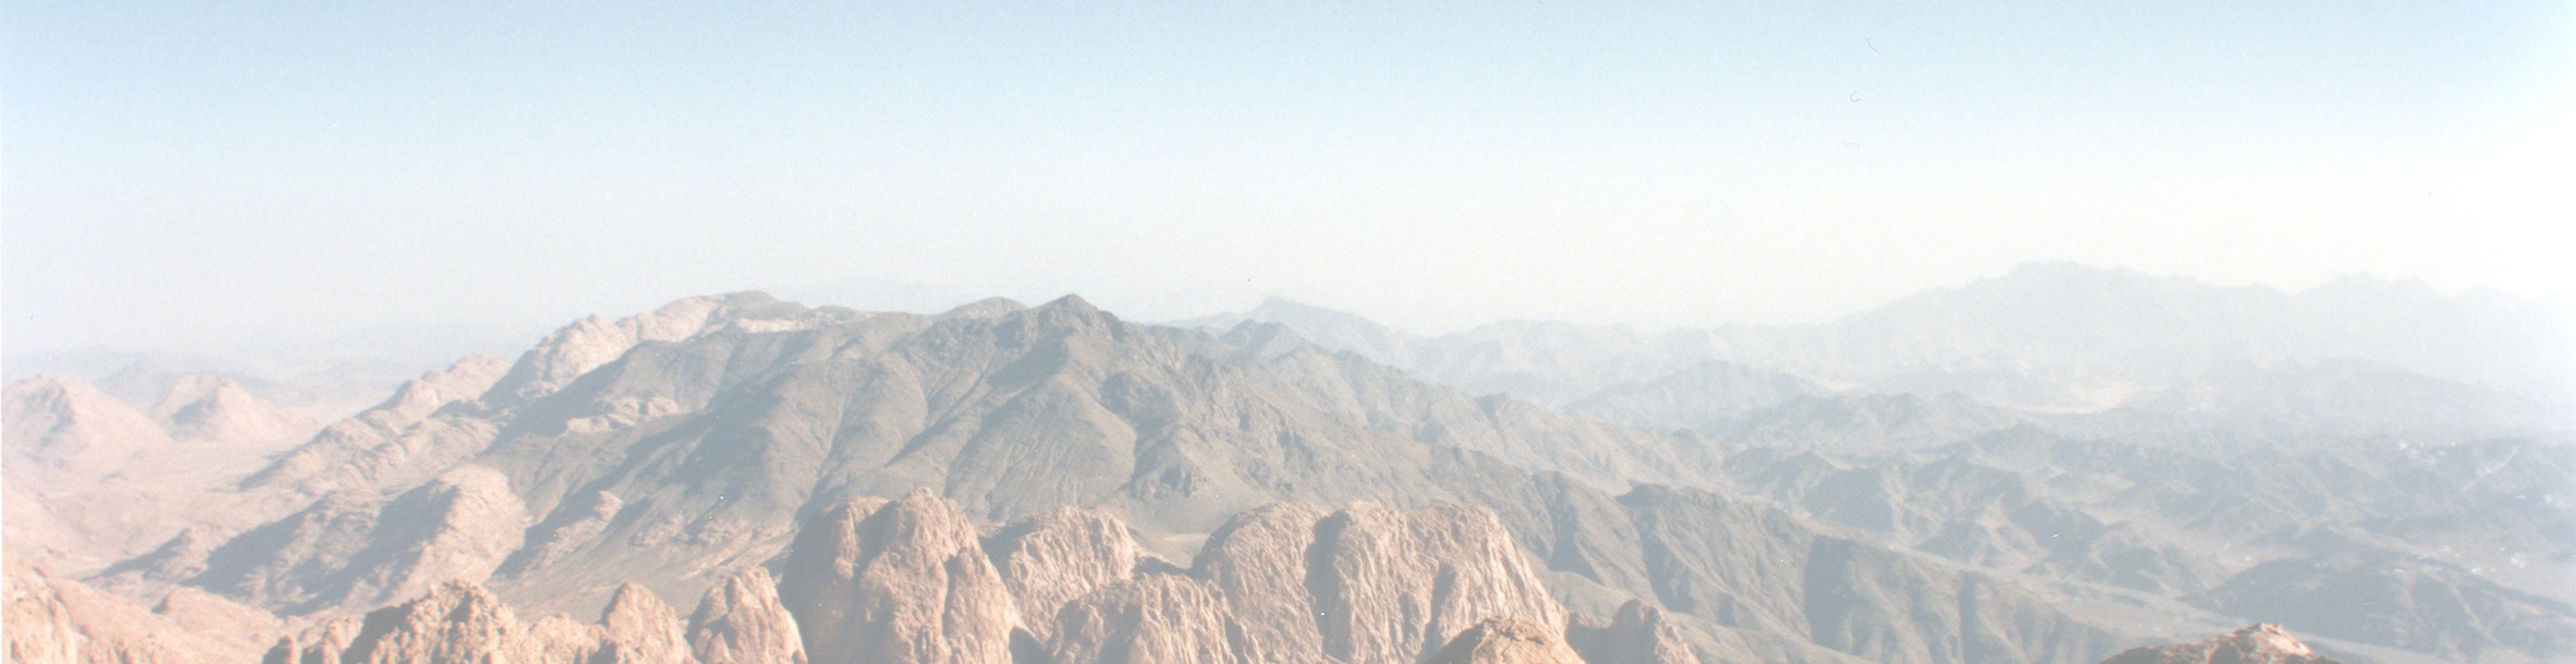 Climbing Jebel Lawz:       Then & Now